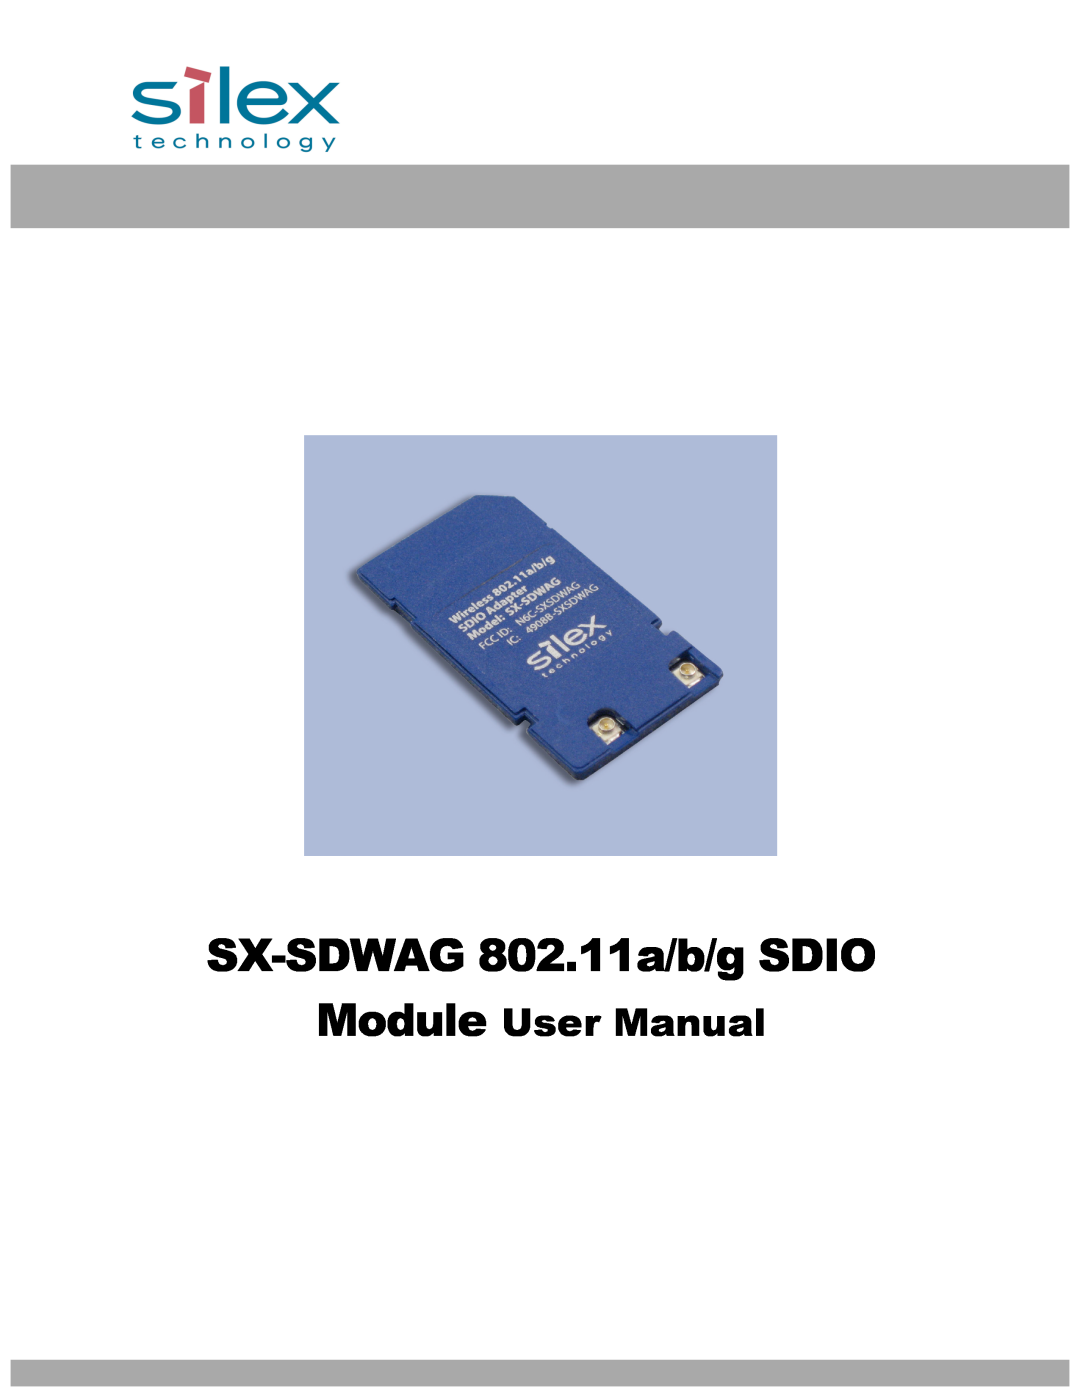 Silex technology user manual SX-SDWAG 802.11a/b/g SDIO, Module User Manual 